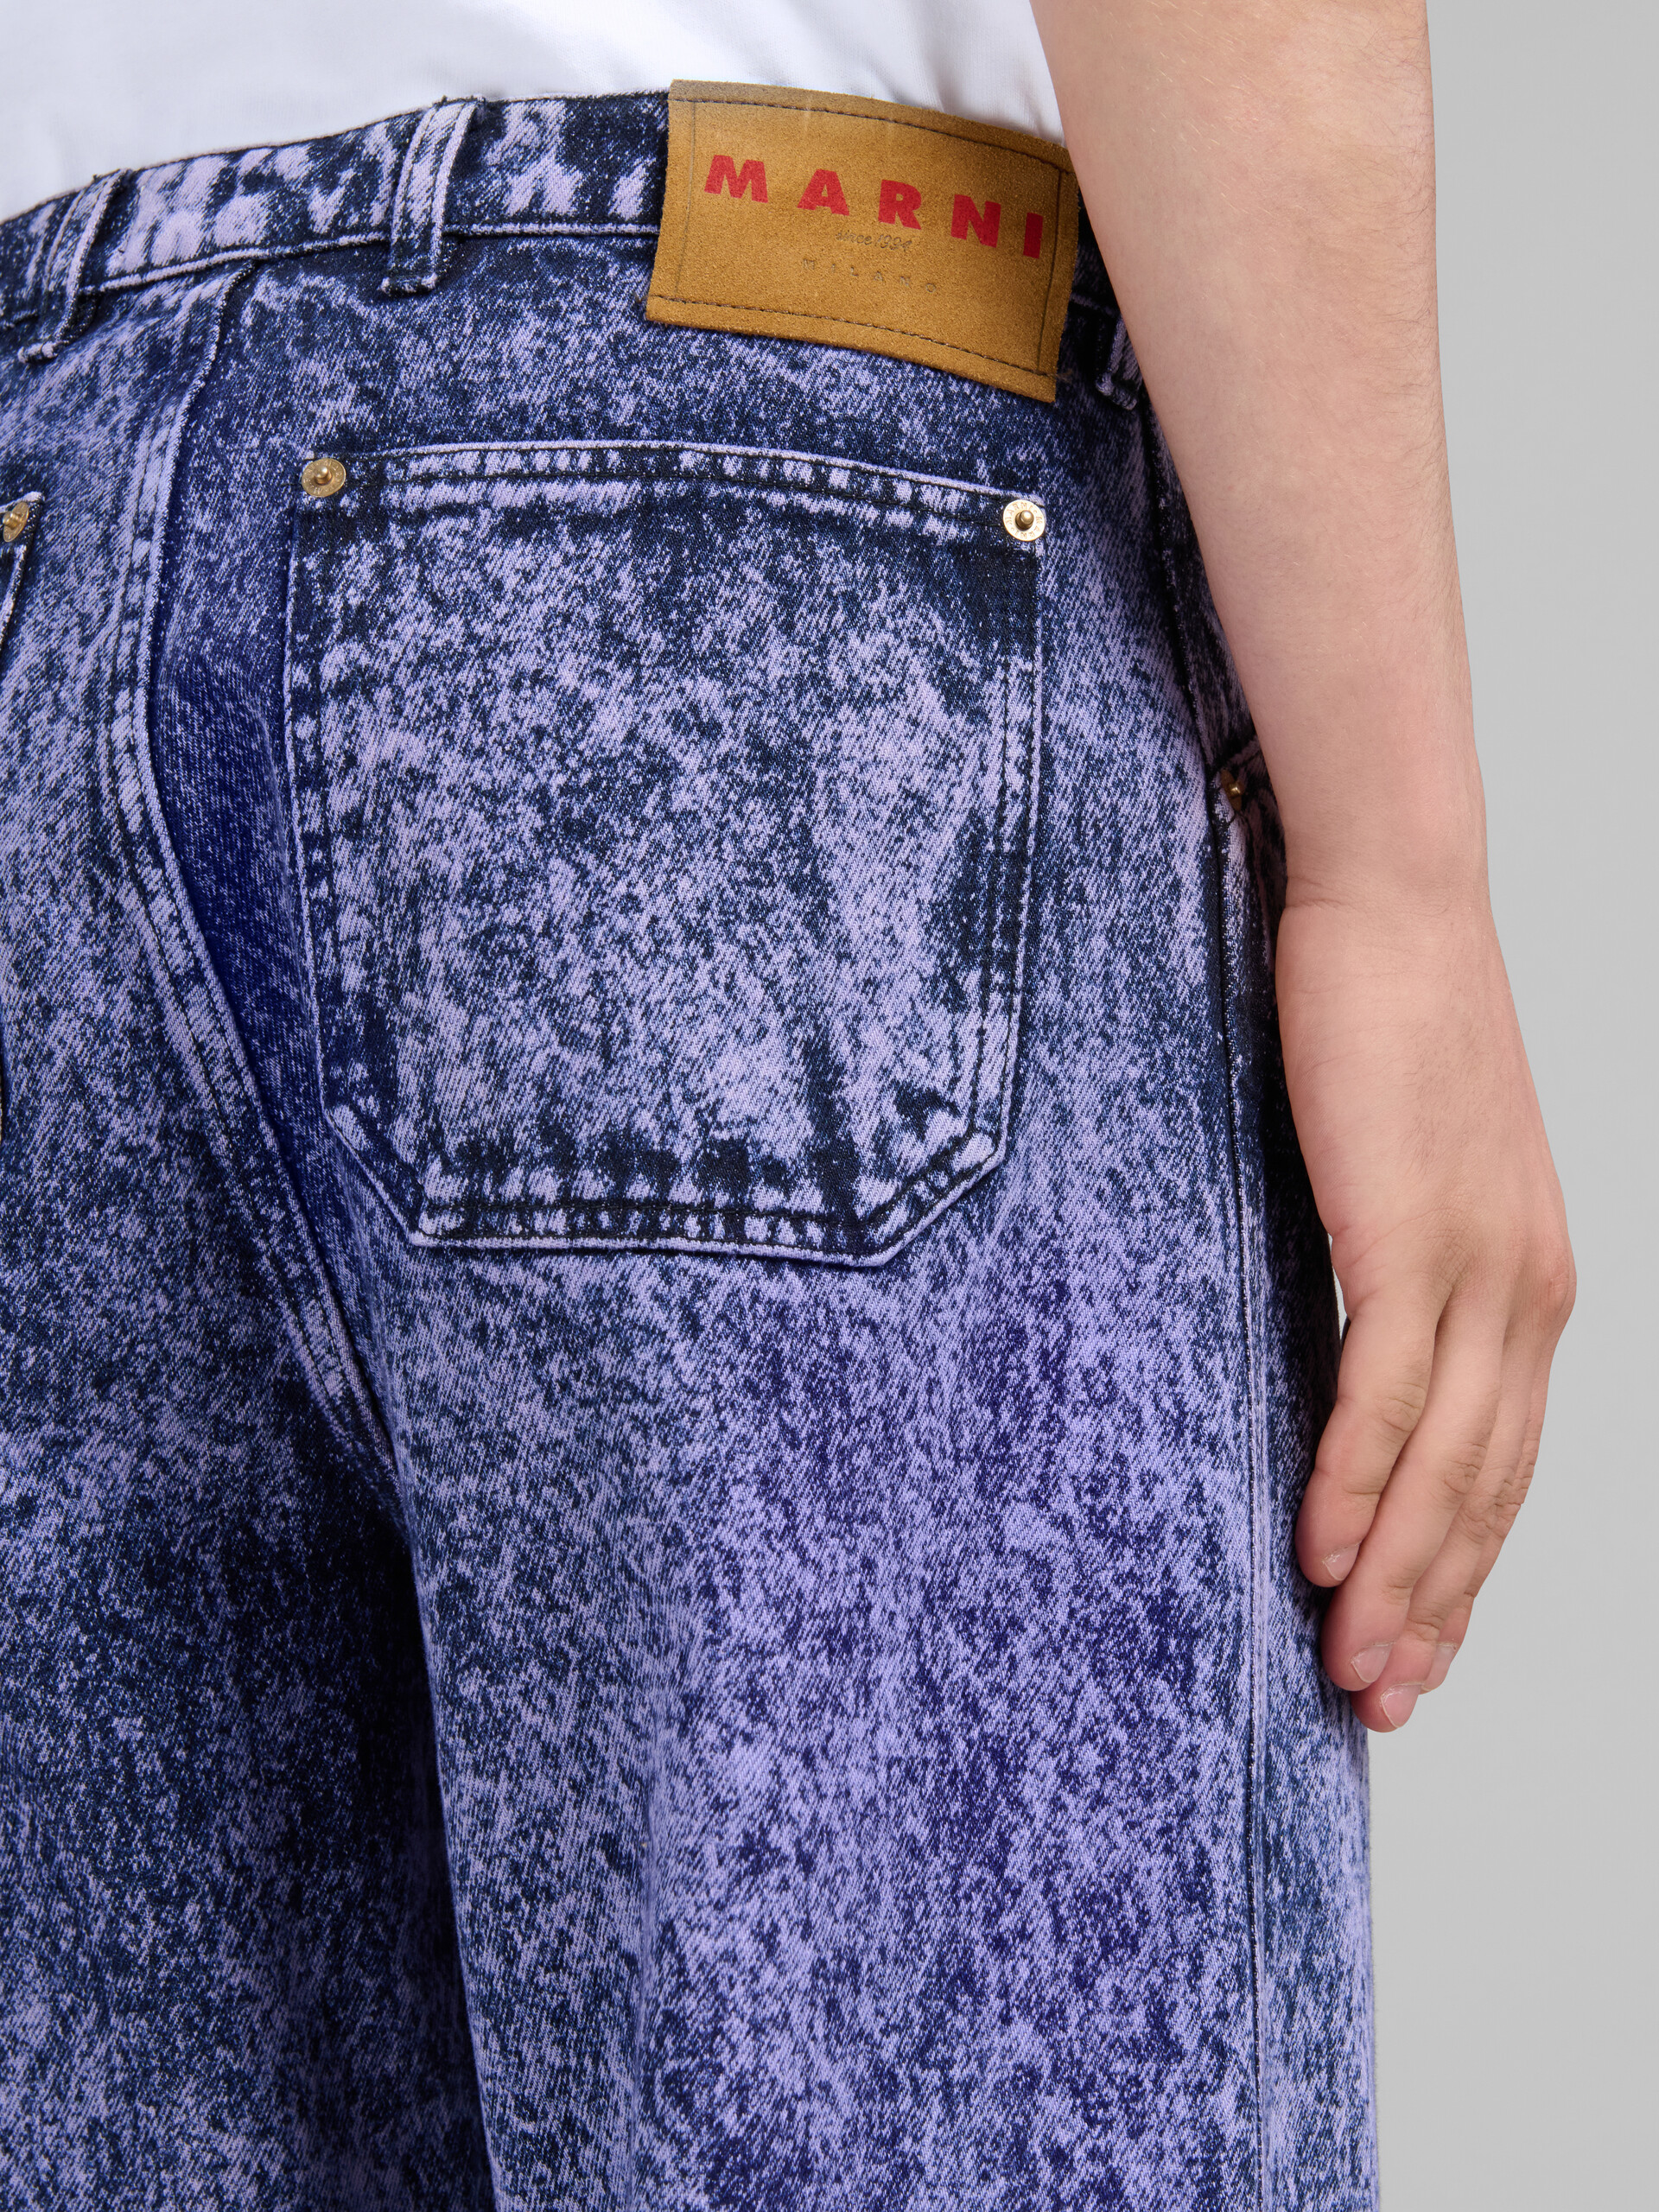 Baue Denim-Jeans mit marmoriertem Finish - Hosen - Image 4